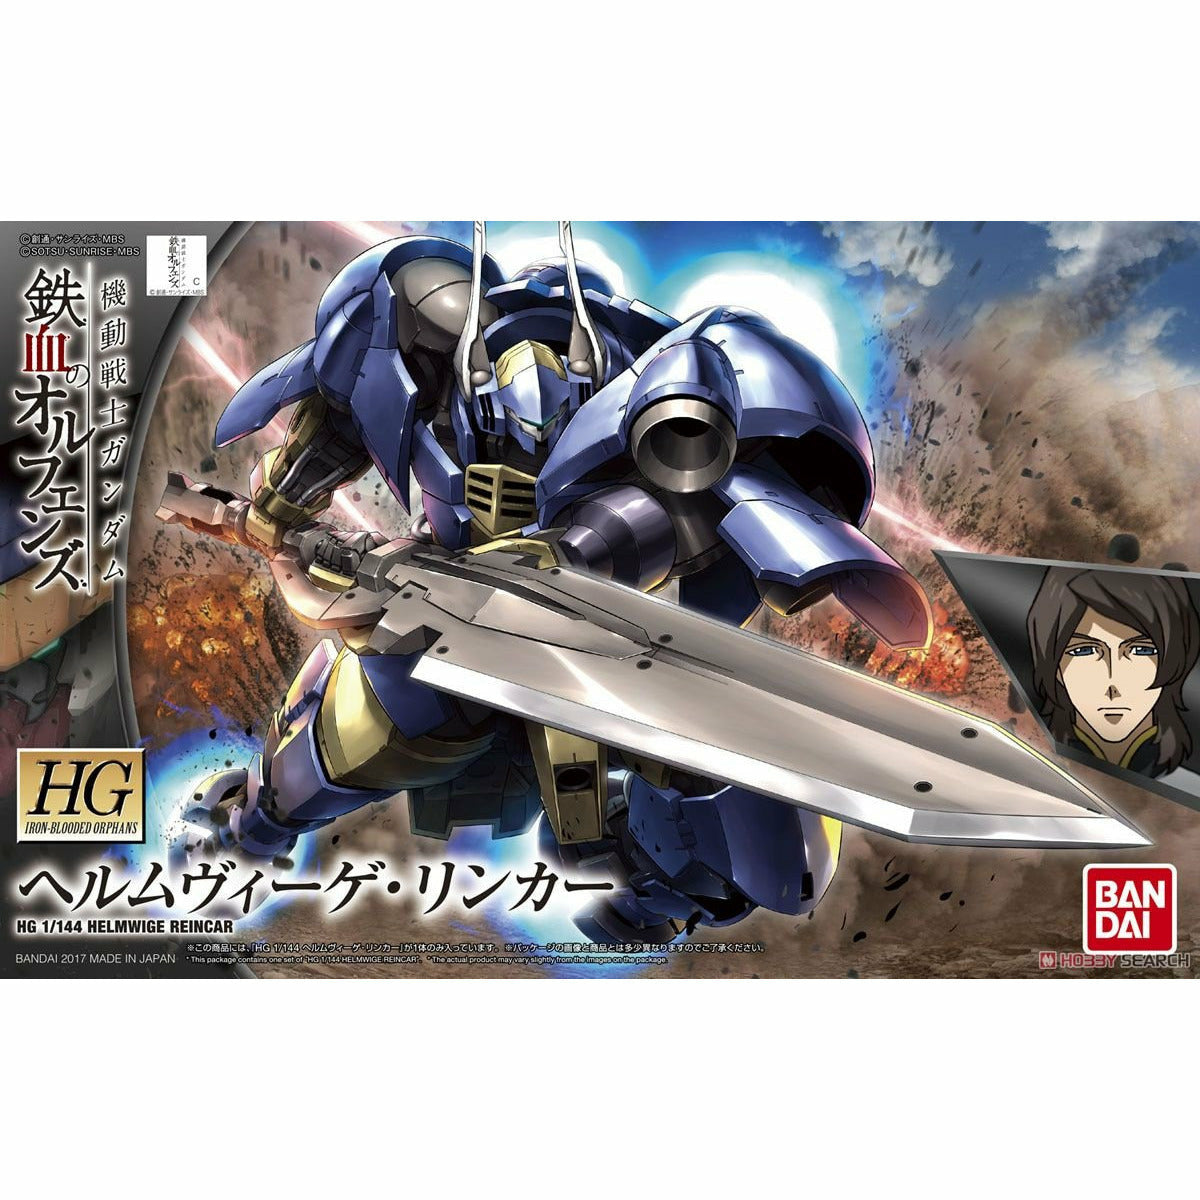 HG 1/144 Iron-Blooded Orphans Gundam #32 Helmwige Reincar #5055450 by Bandai